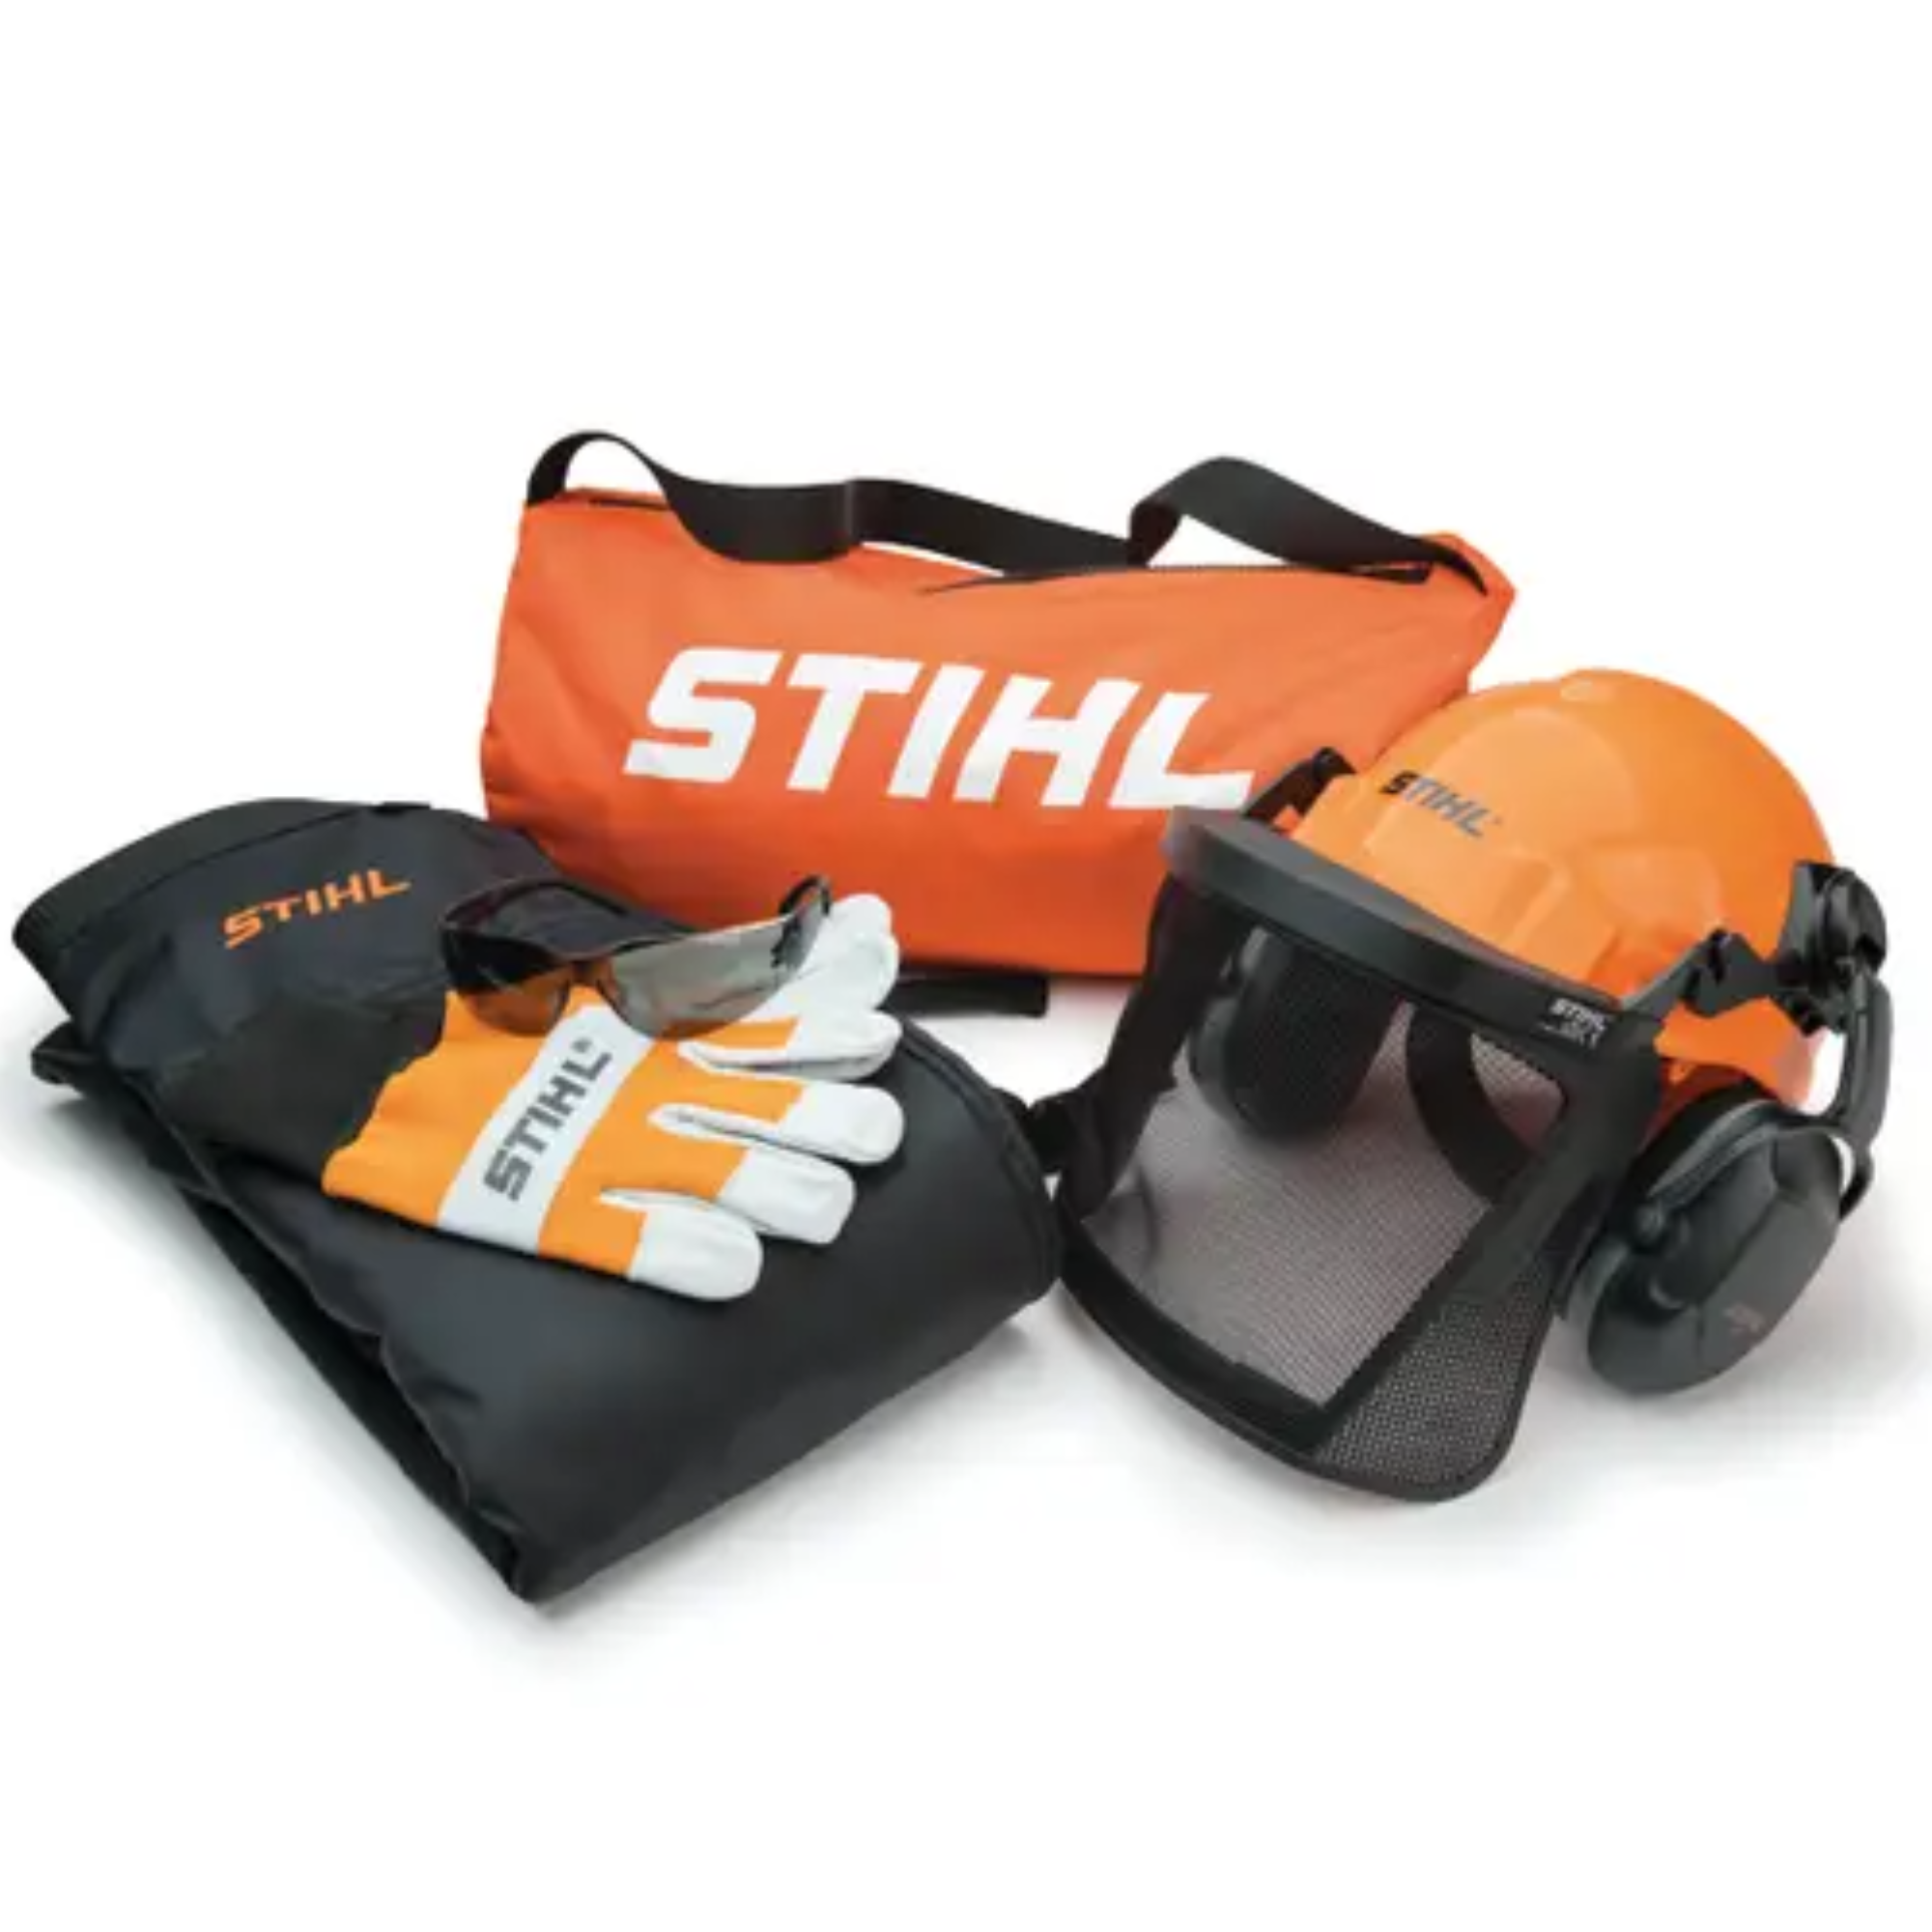 Stihl Personal Protective Equipment Kit | 7010 871 0280